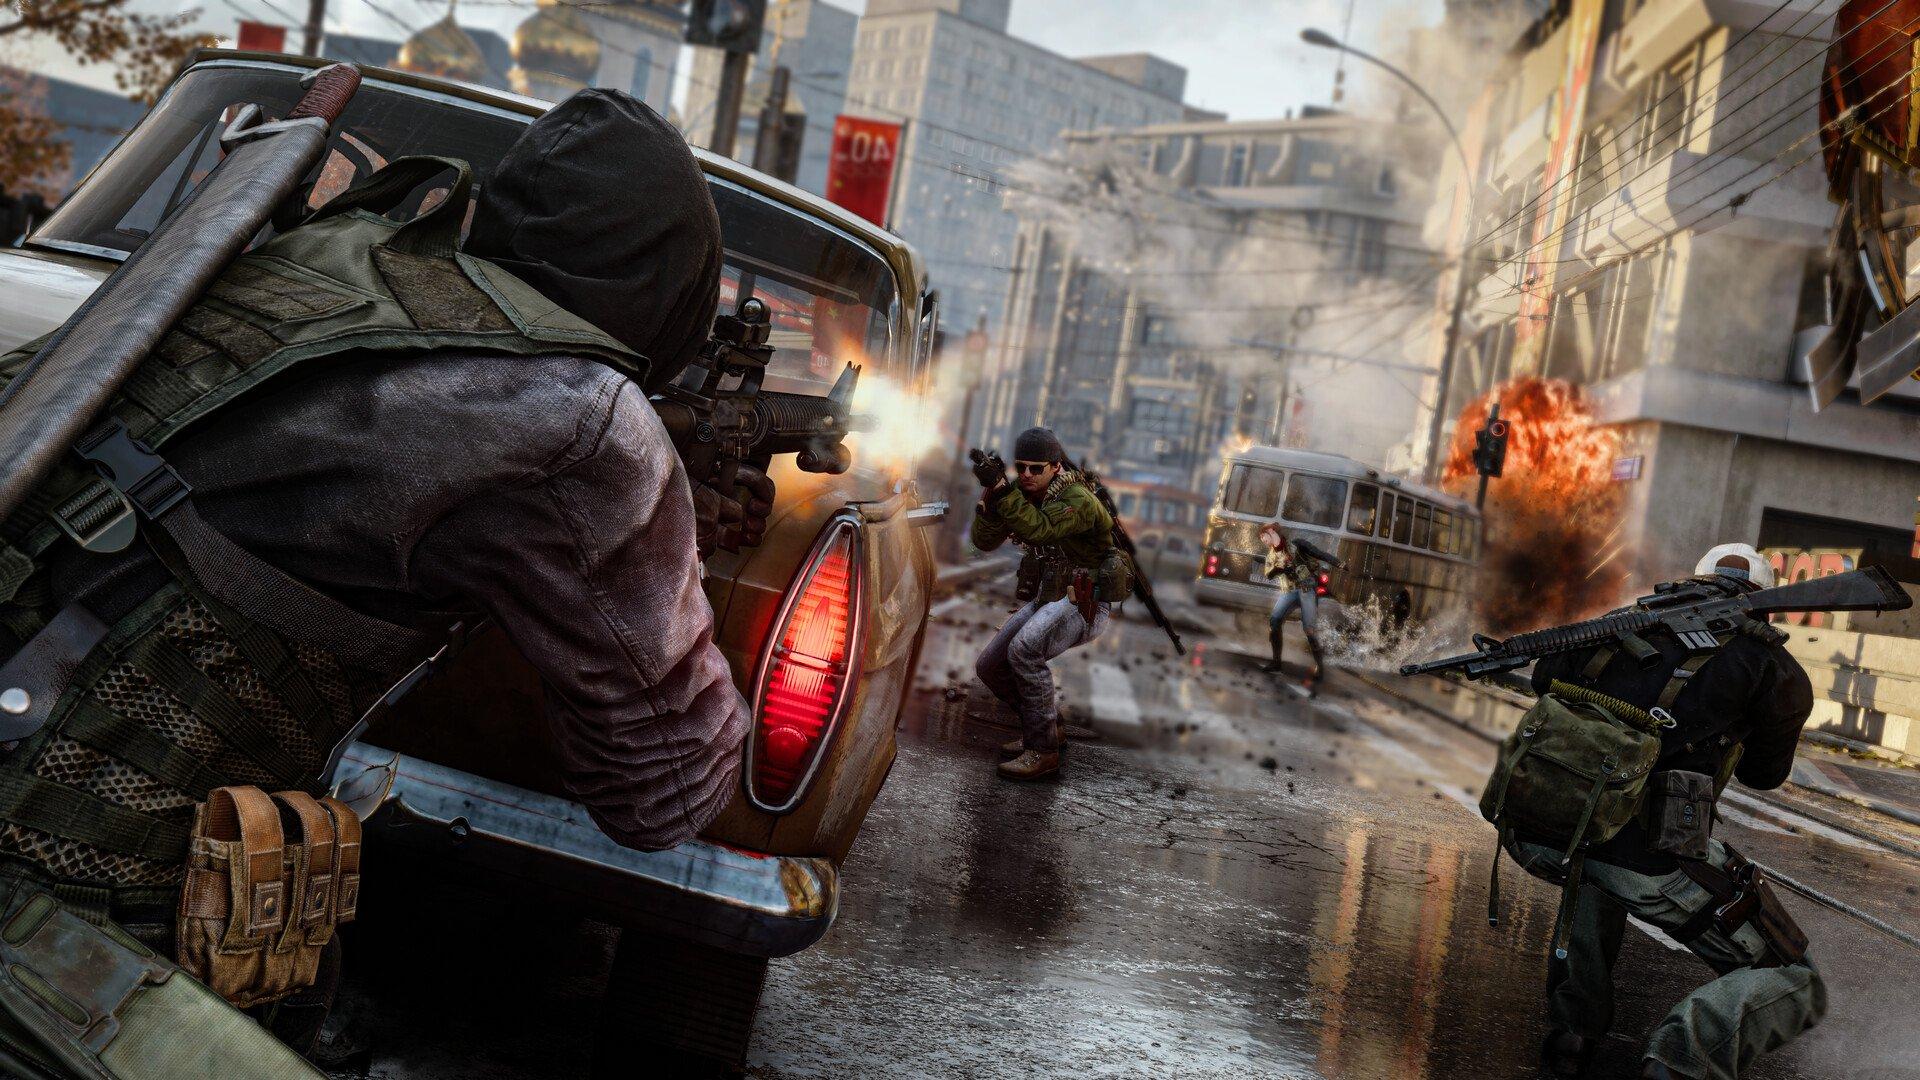 Call of Duty: Black Ops Cold War (PS5) - Estándar Edition 